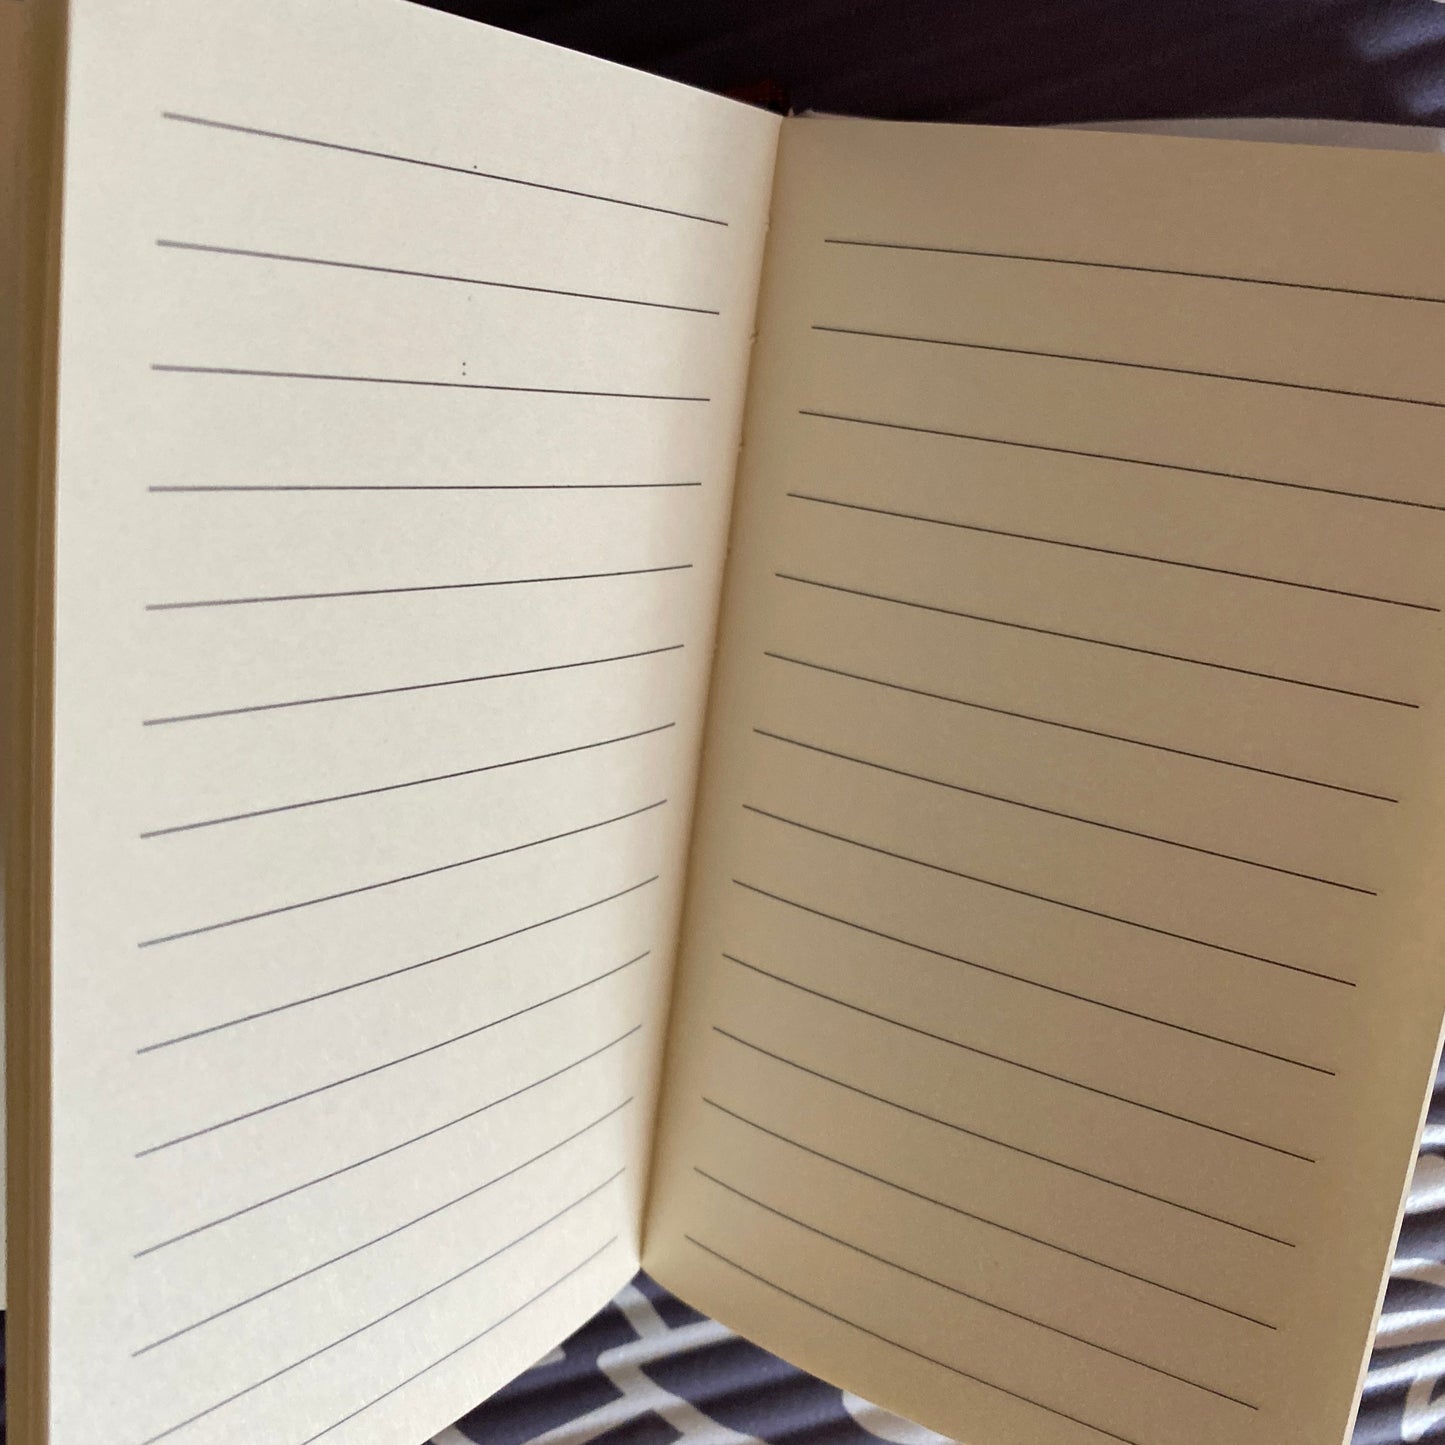 Stationary Illuminate Yourself Mini Notebook